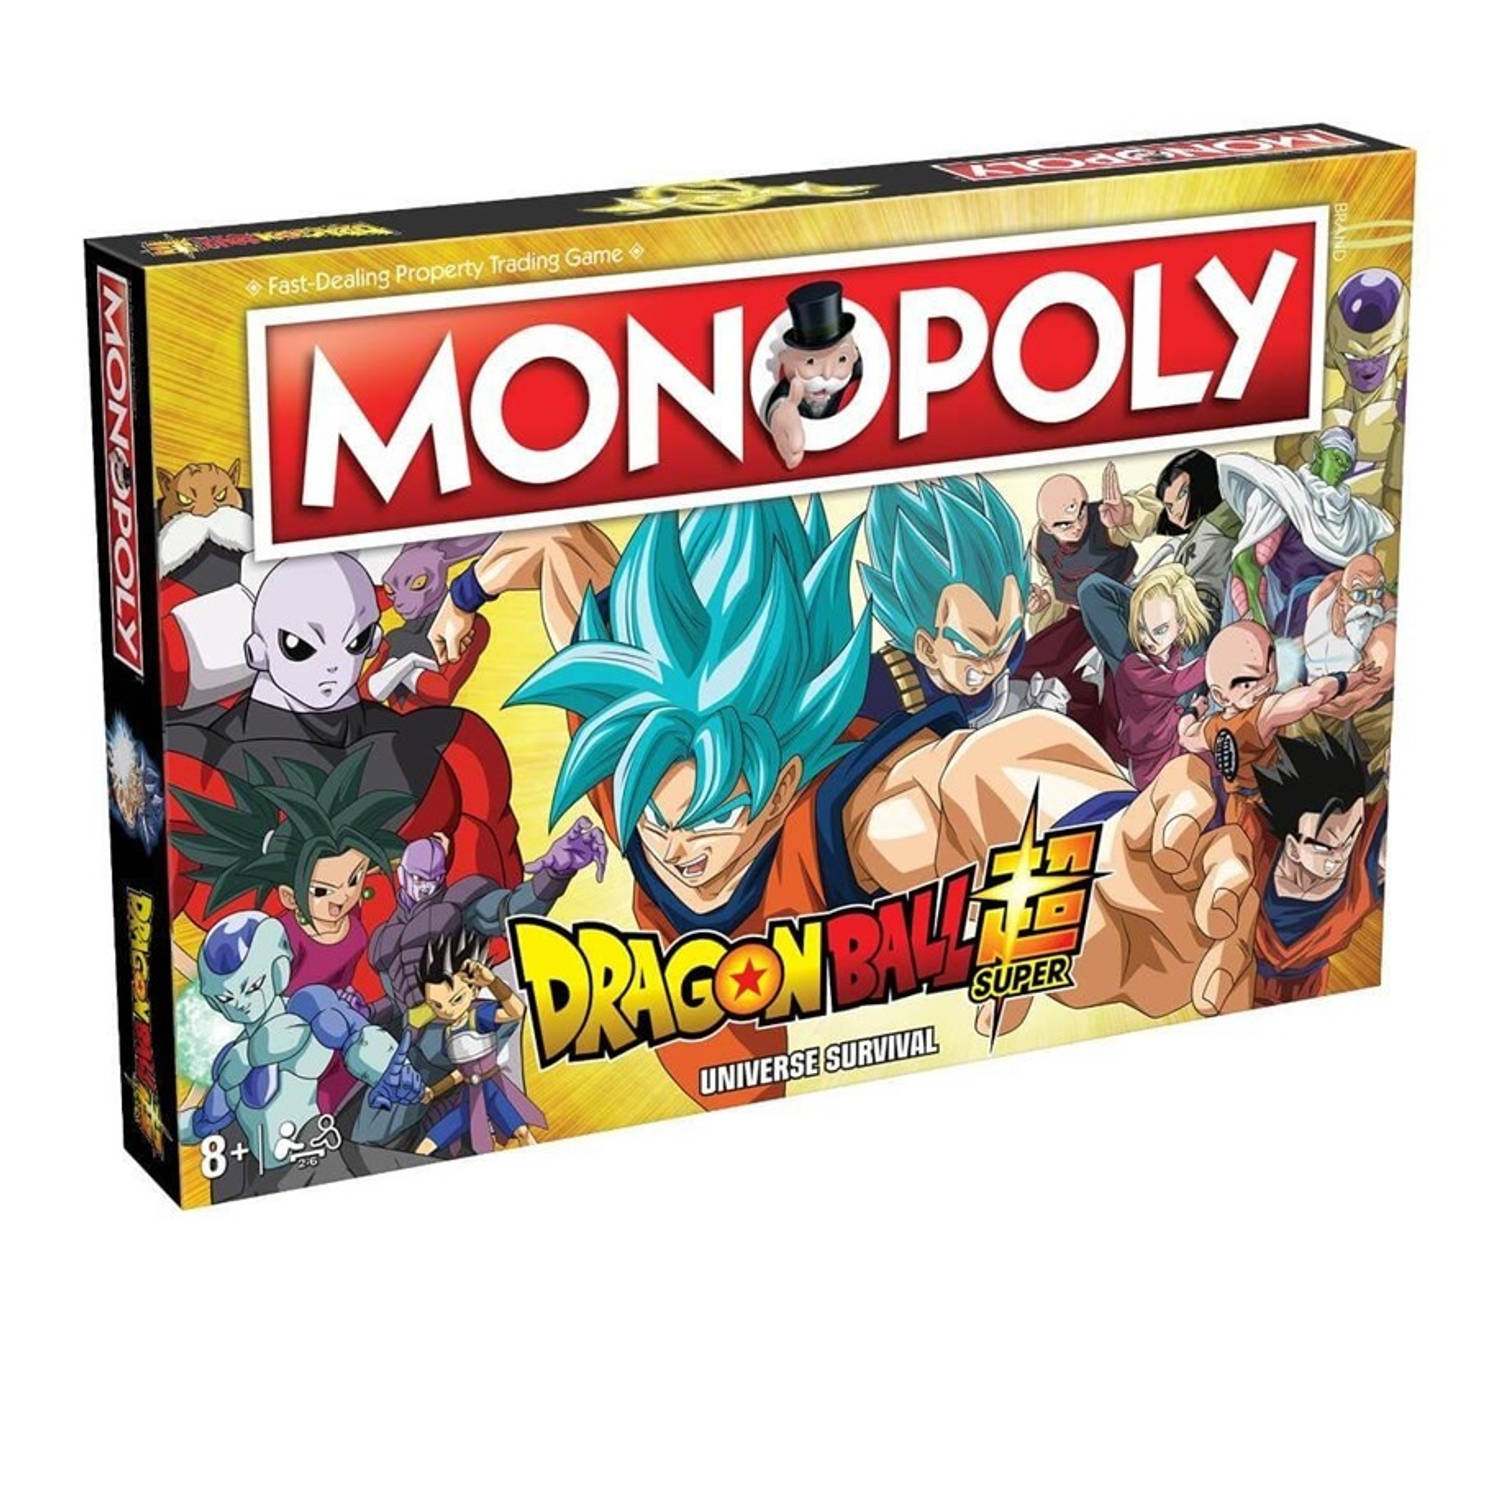 Monopoly Dragon Ball Super Universe Survival Edition